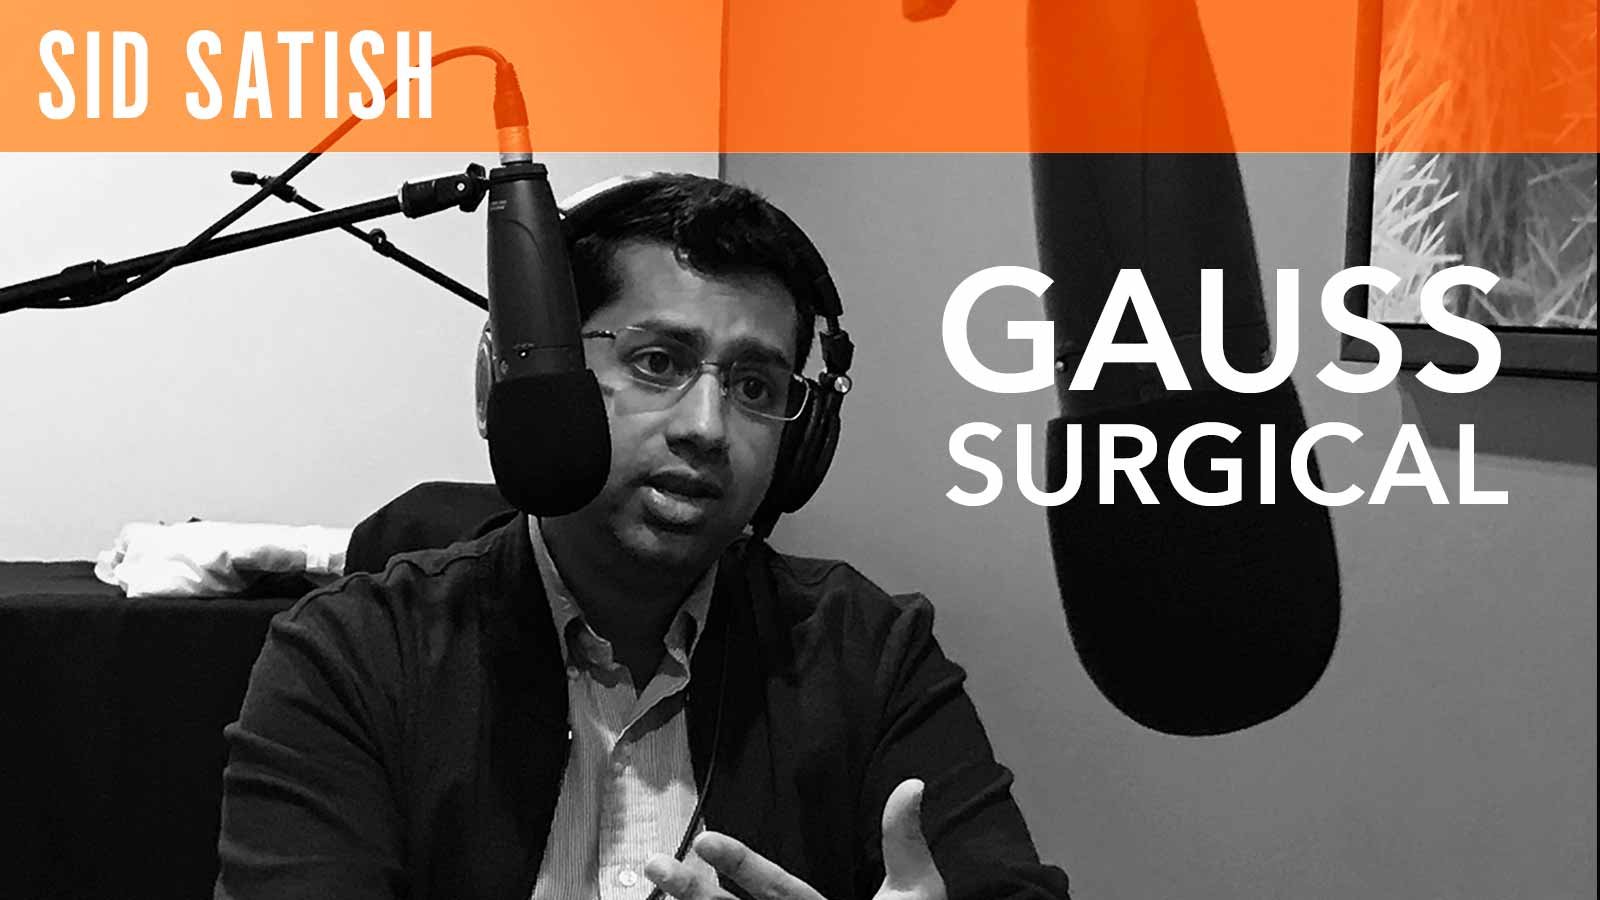 Sid Satish, "Gauss Surgical"